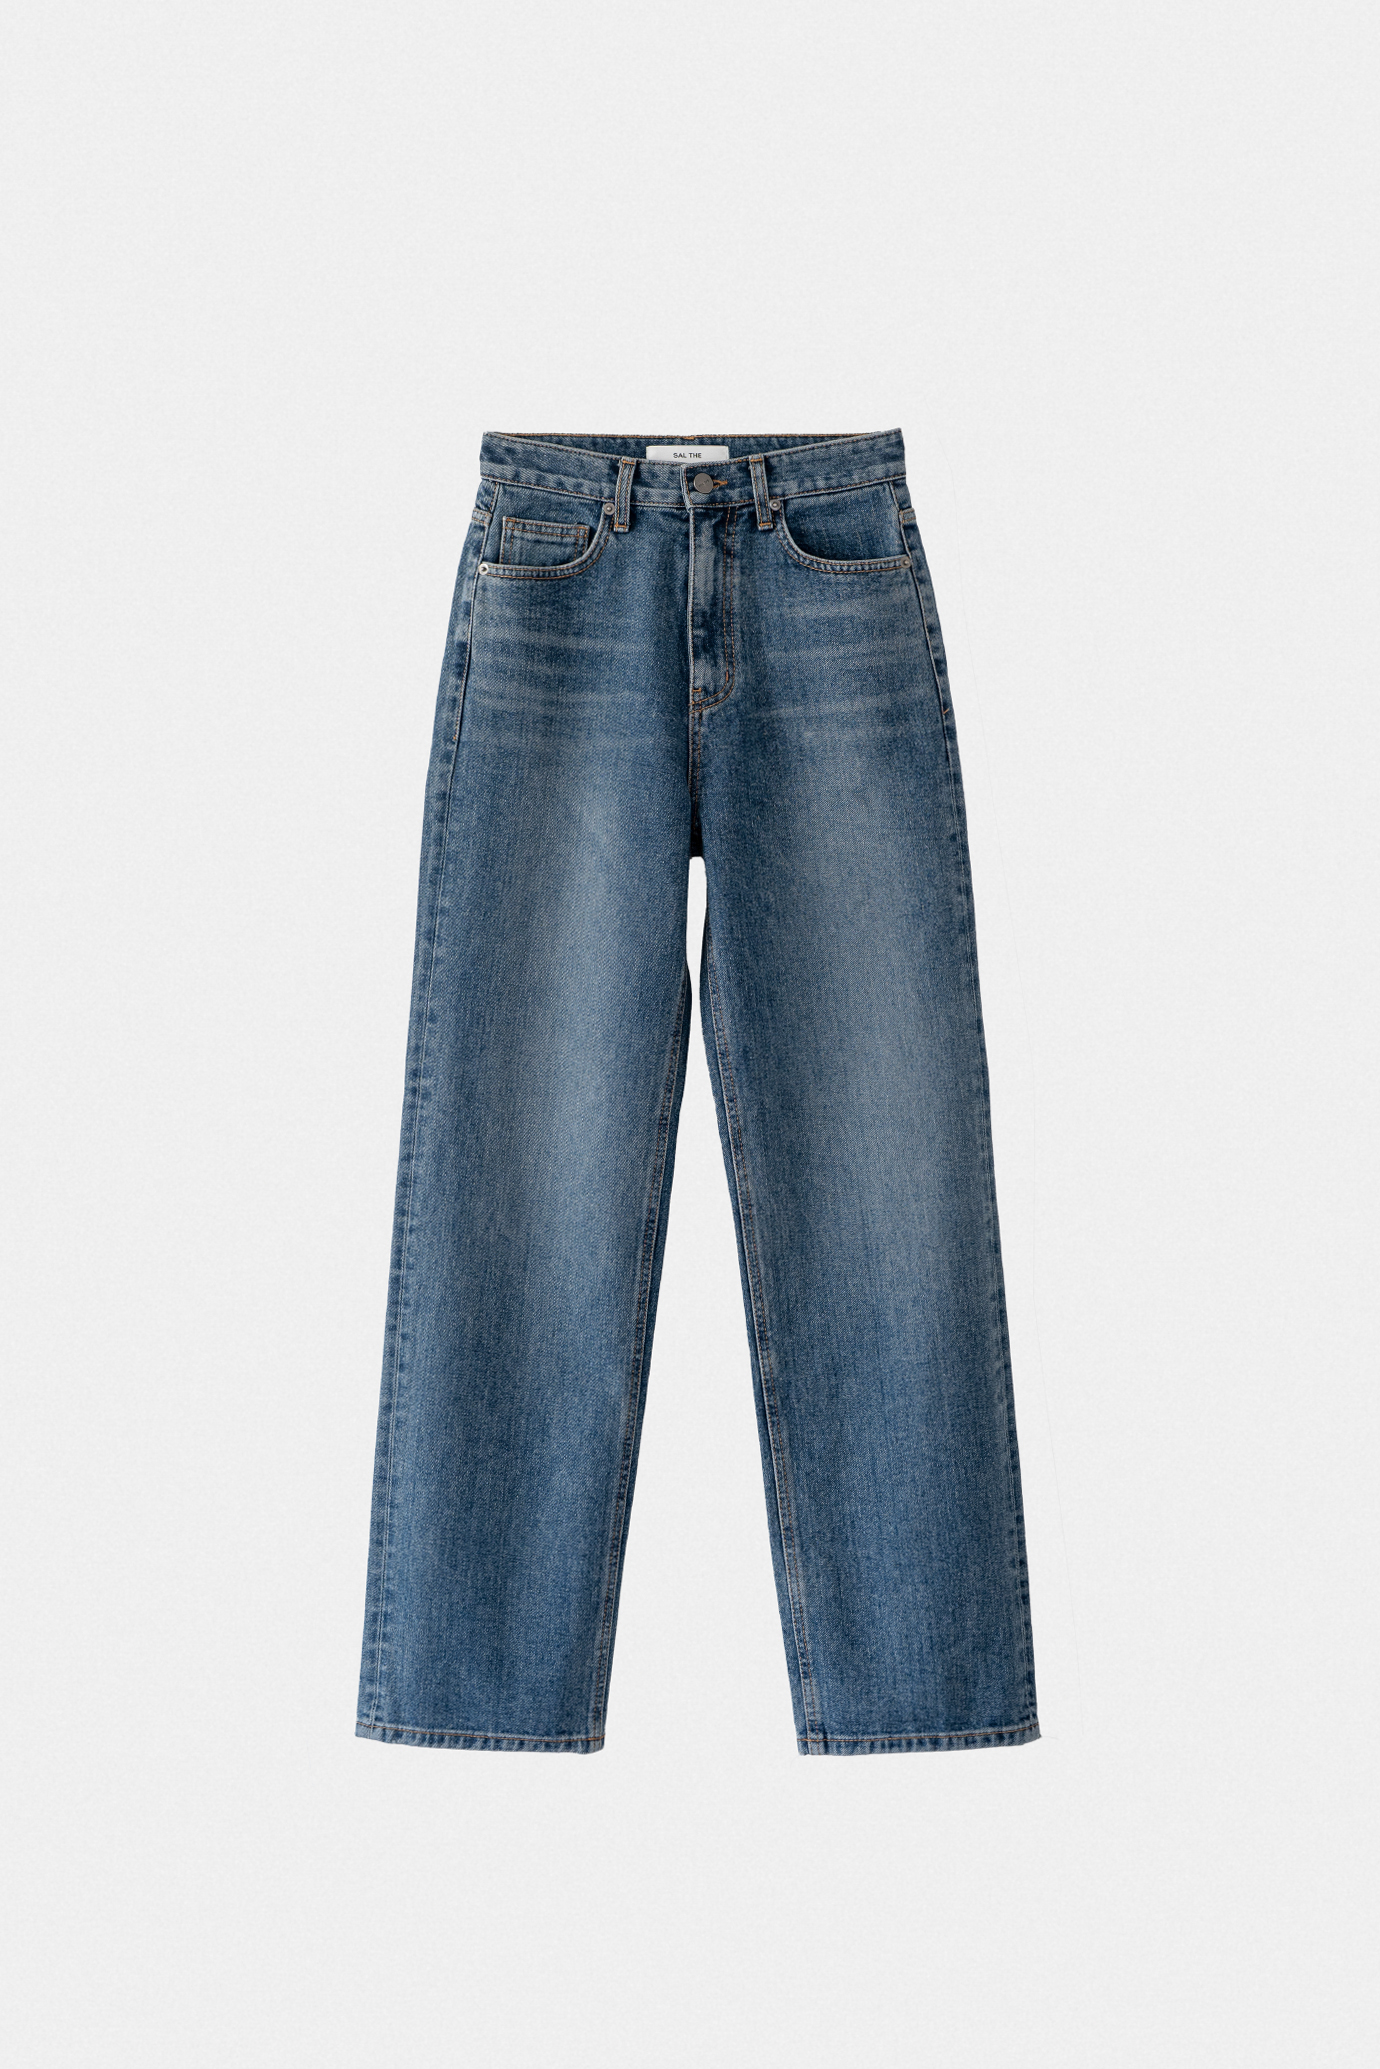 19093_Classic Blue Jeans